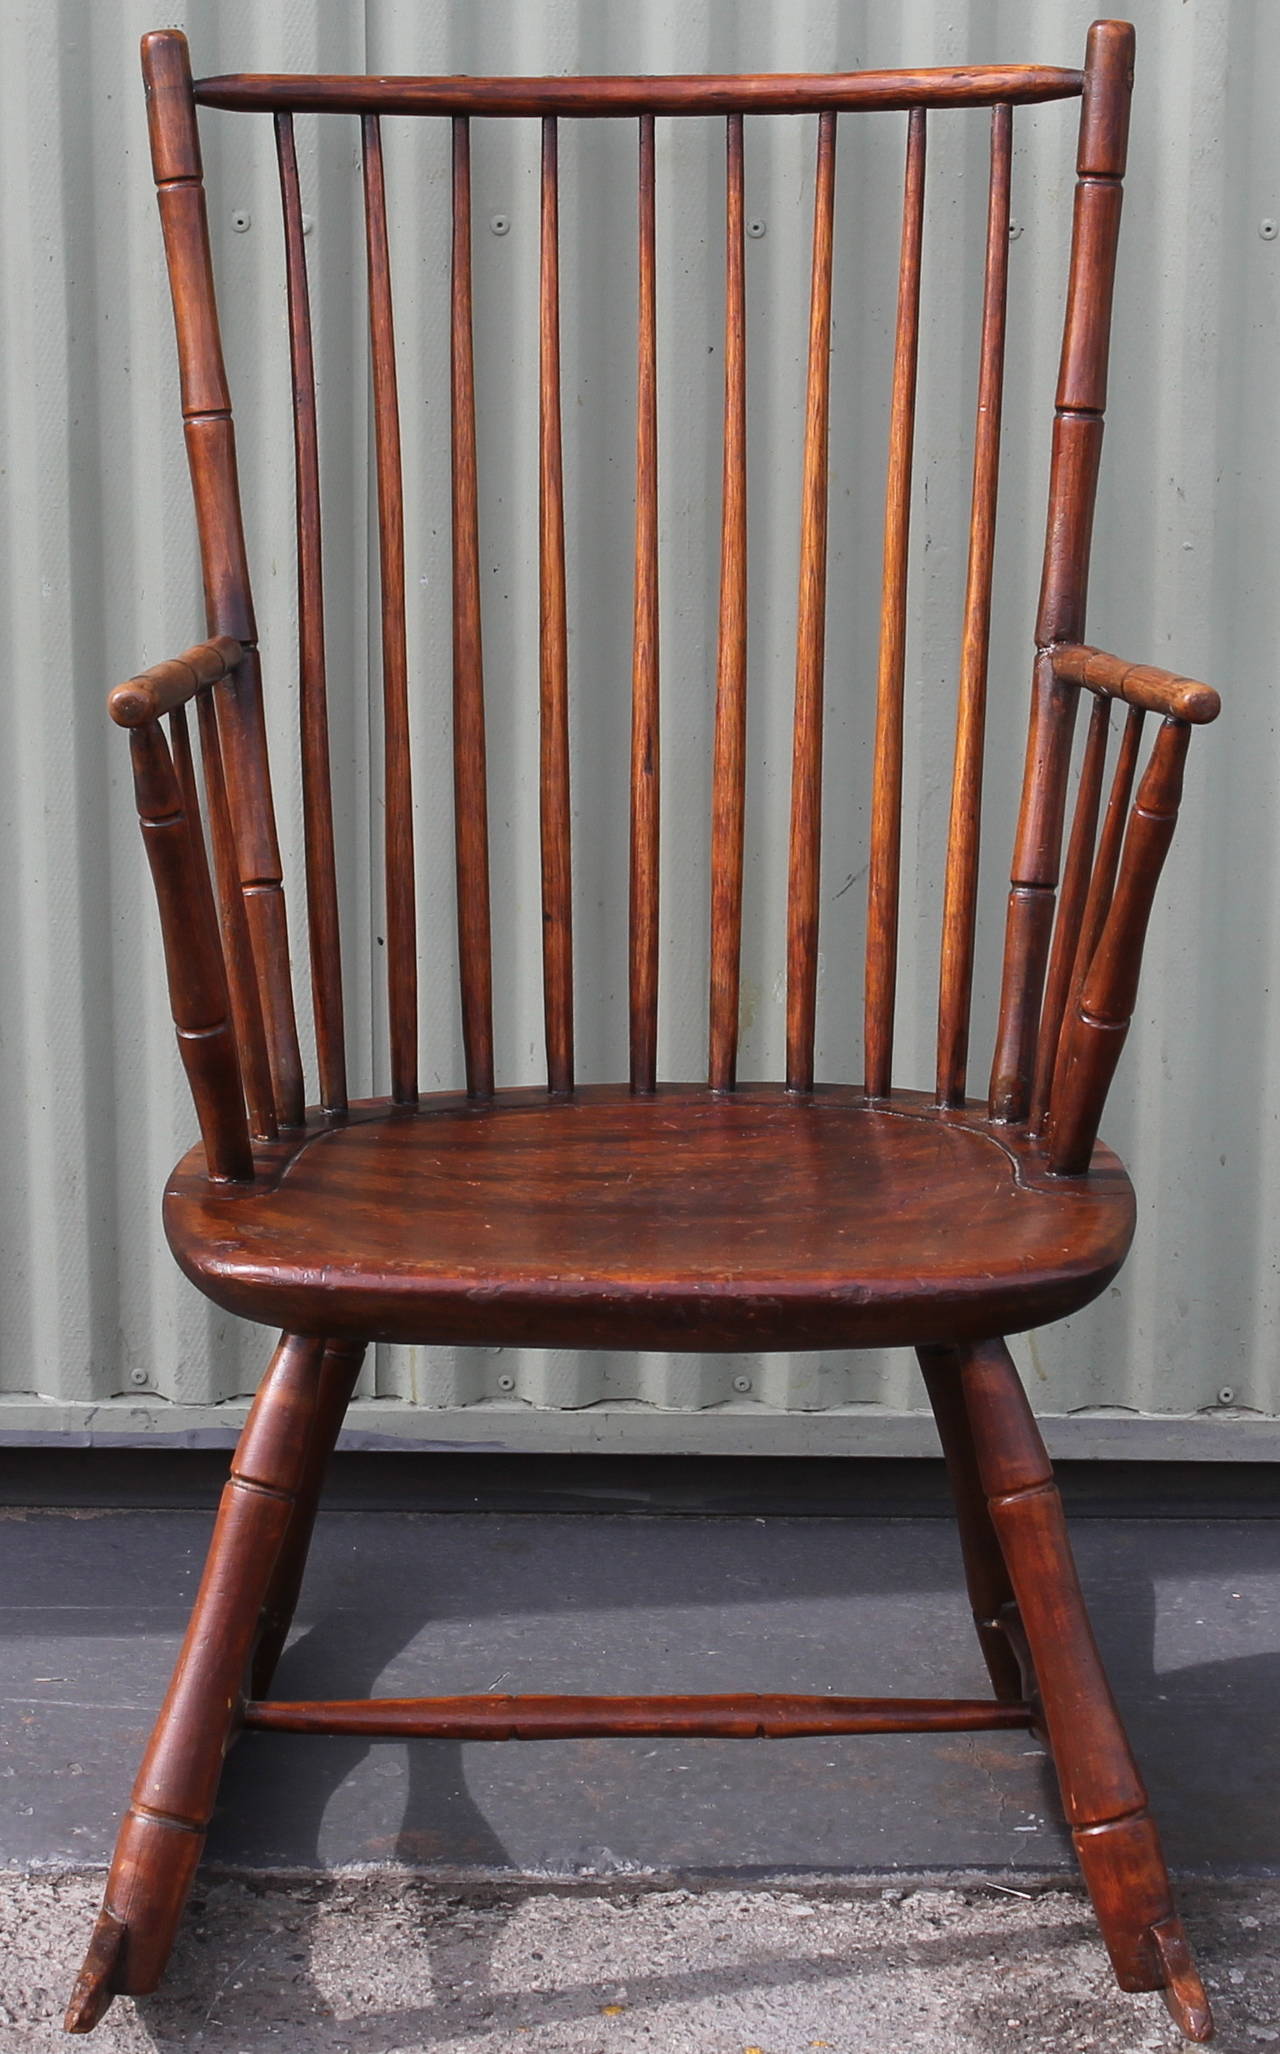 Folk Art 19th Century Windsor Rocking Chair from Pennsylvania